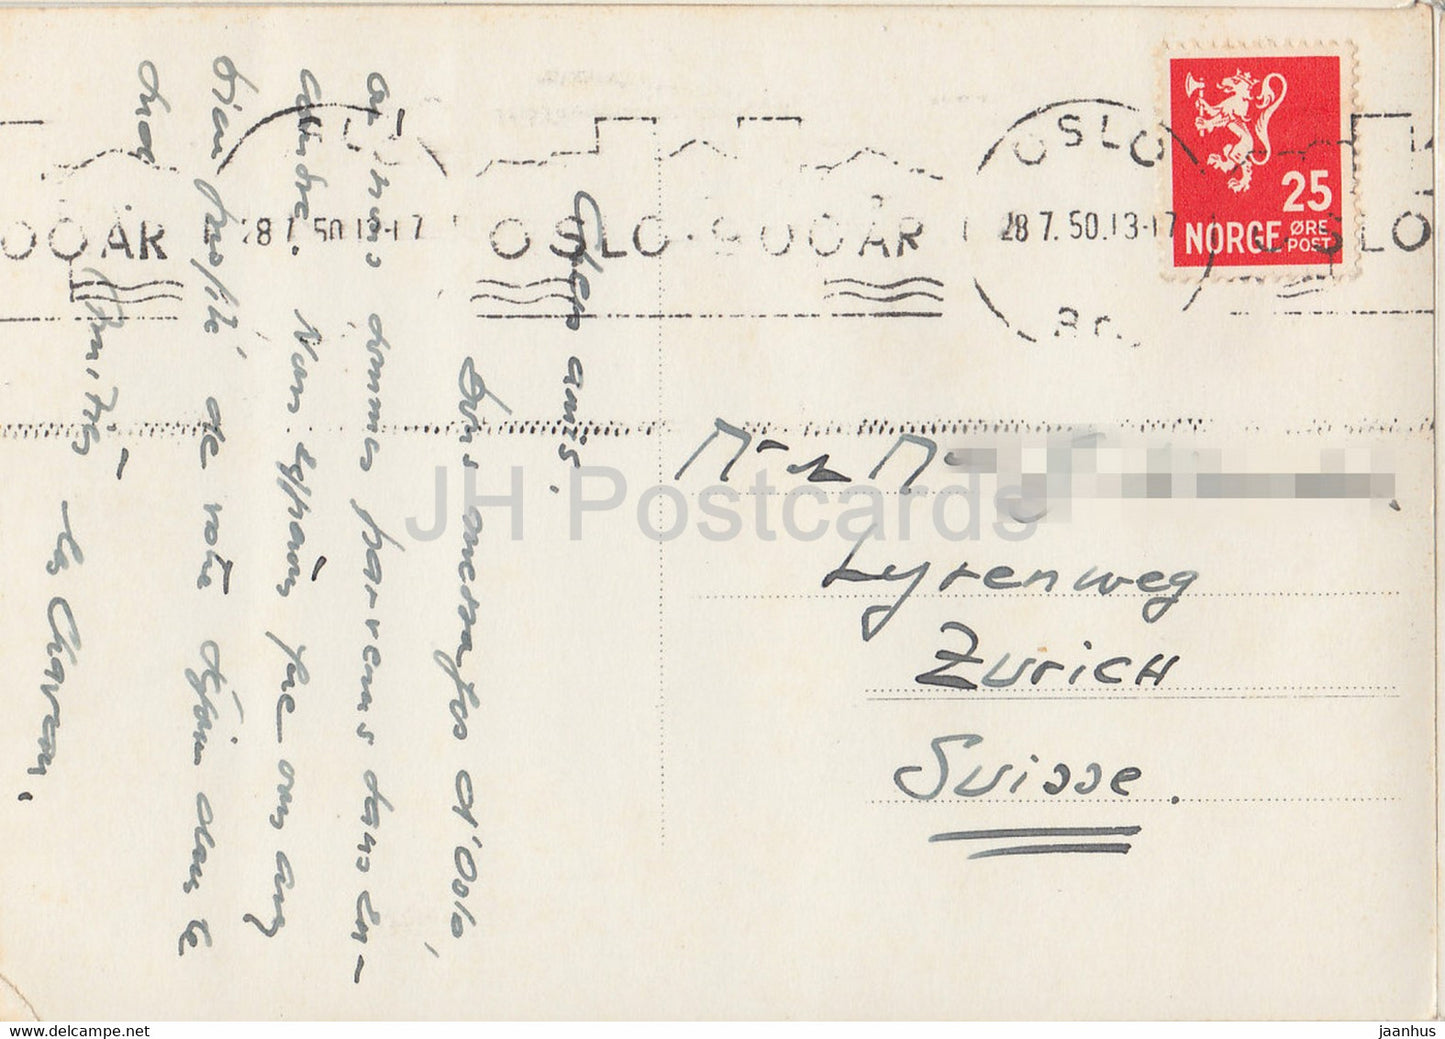 Oslo - Slottet - château - carte postale ancienne - 1950 - Norvège - utilisé